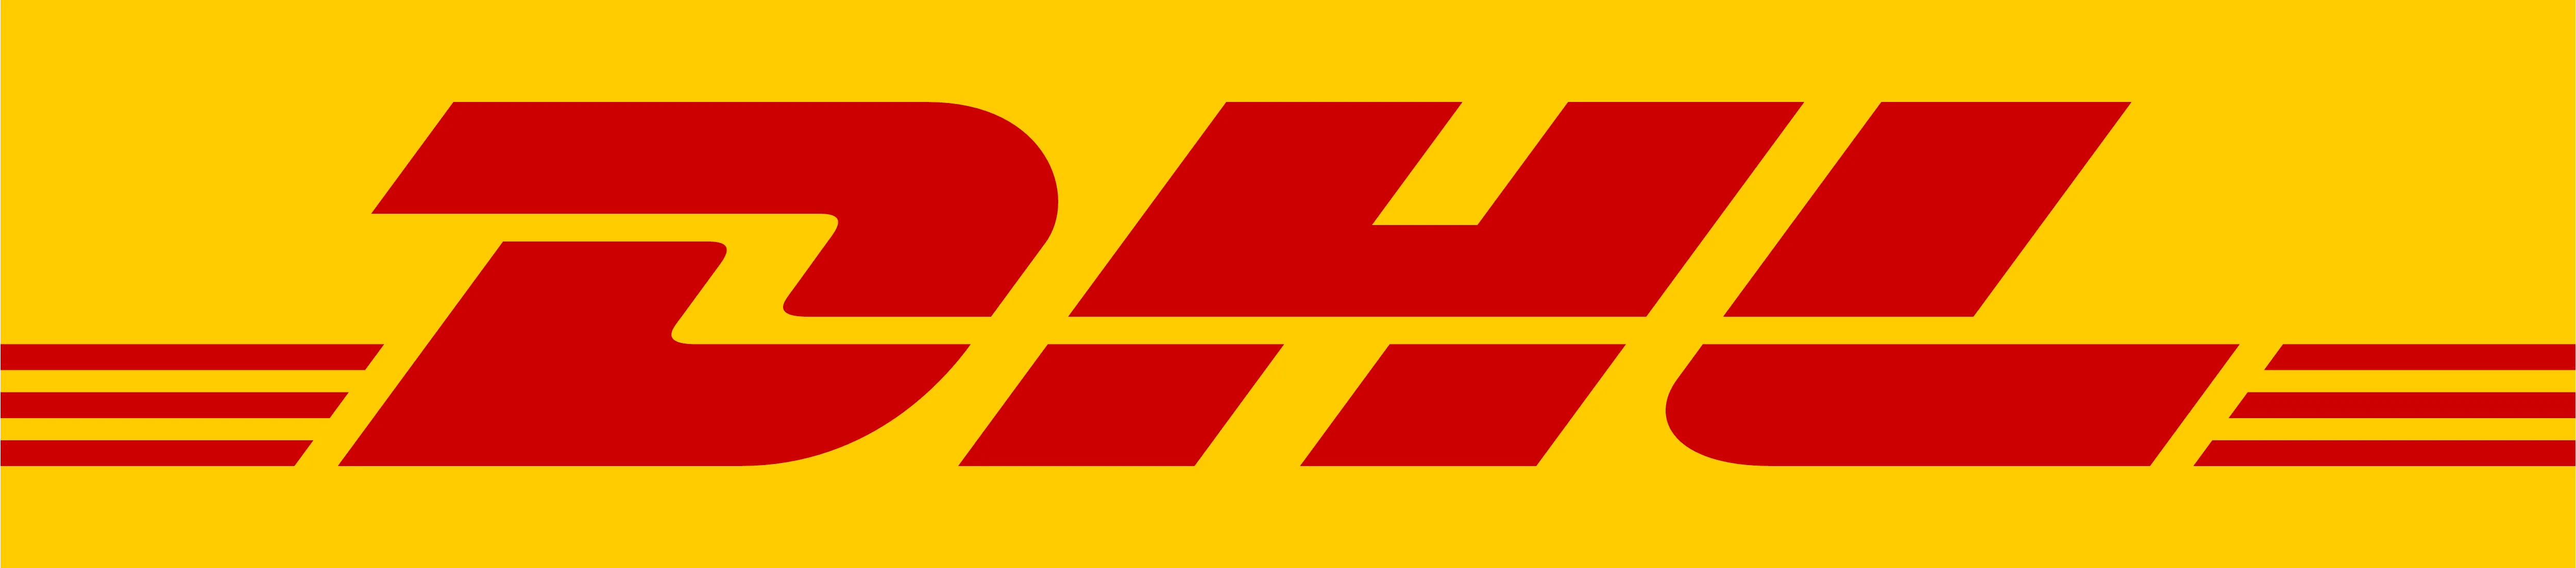 DHL. ДЧЛ логотип. DHL логотип компании. Логотип DHL Express.